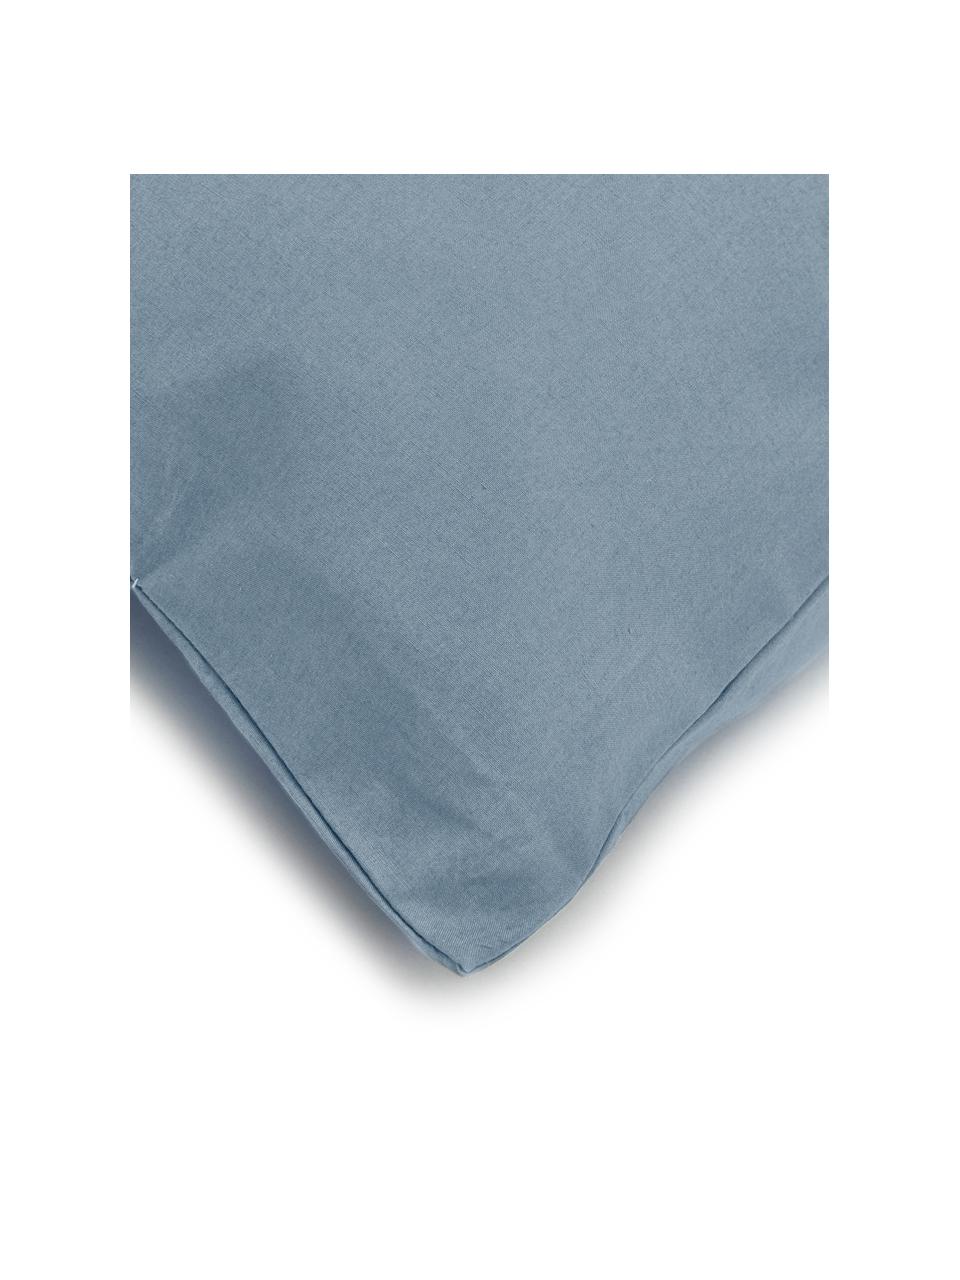 Baumwollperkal-Kopfkissenbezüge Elsie in Blau, 2 Stück, Webart: Perkal Fadendichte 200 TC, Blau, B 40 x L 80 cm